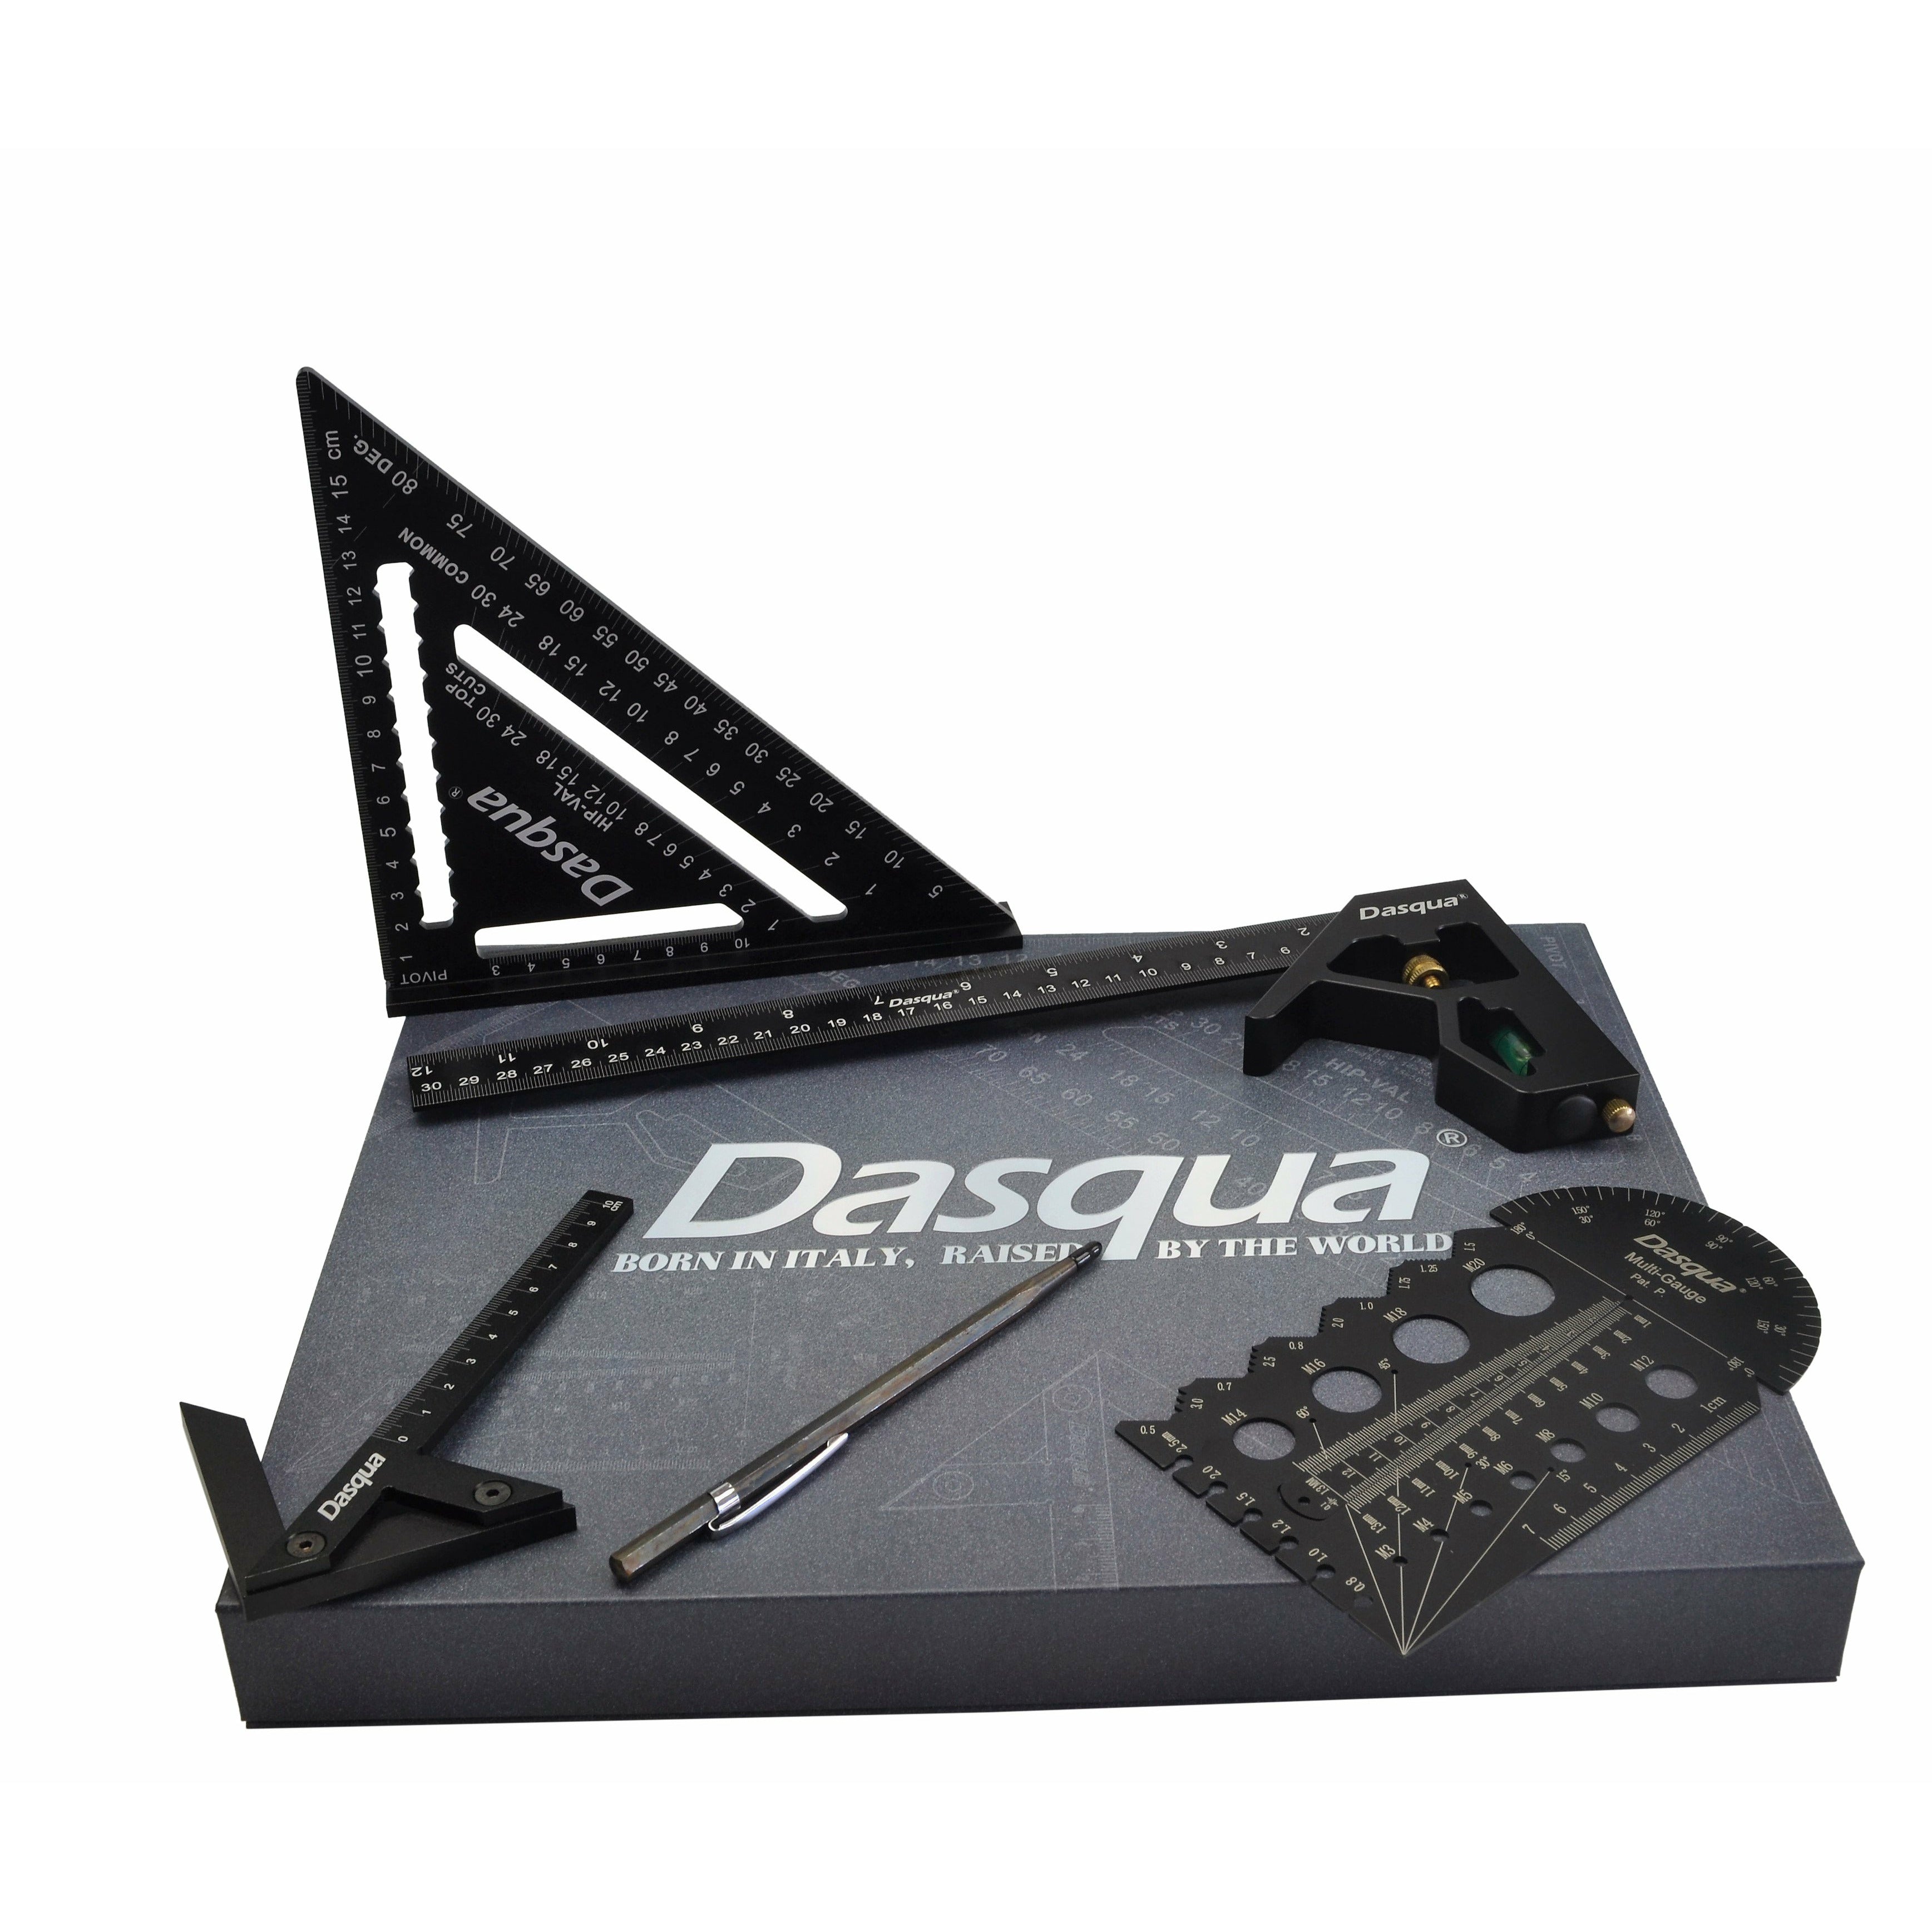 Dasqua Lazer Etched Precision Layout Solution Series 1804-1405 